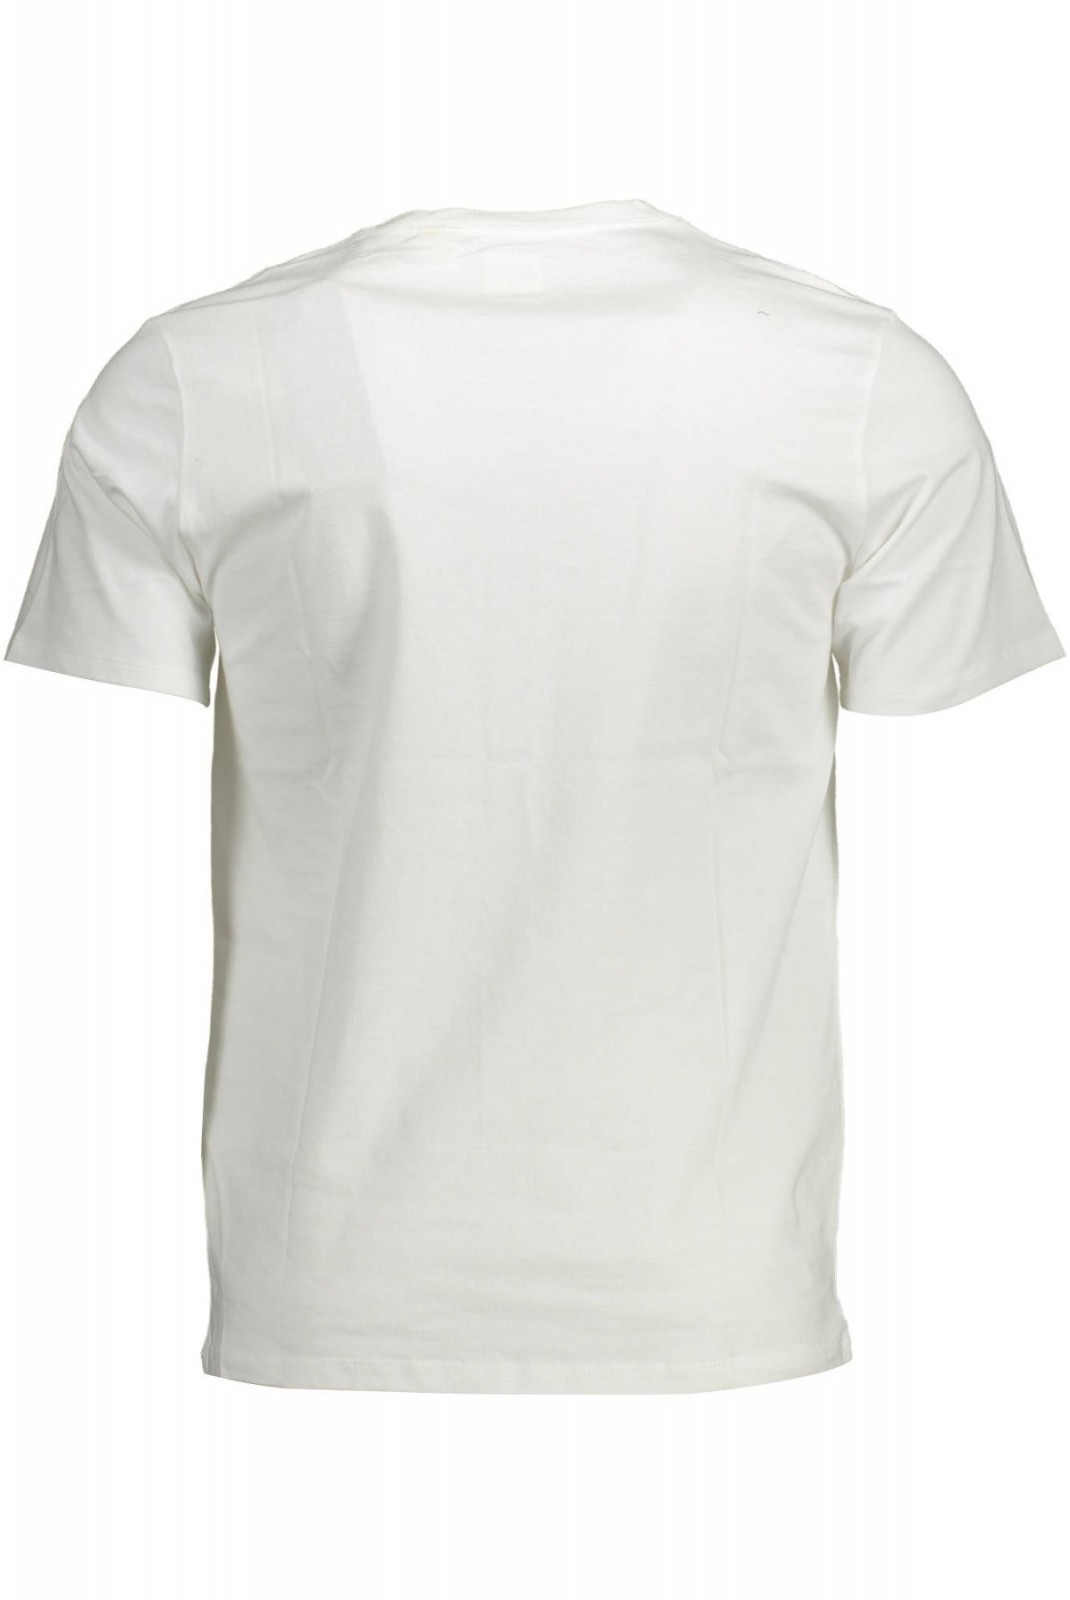 T-shirt logo Levi's 0000 WHITE 85641